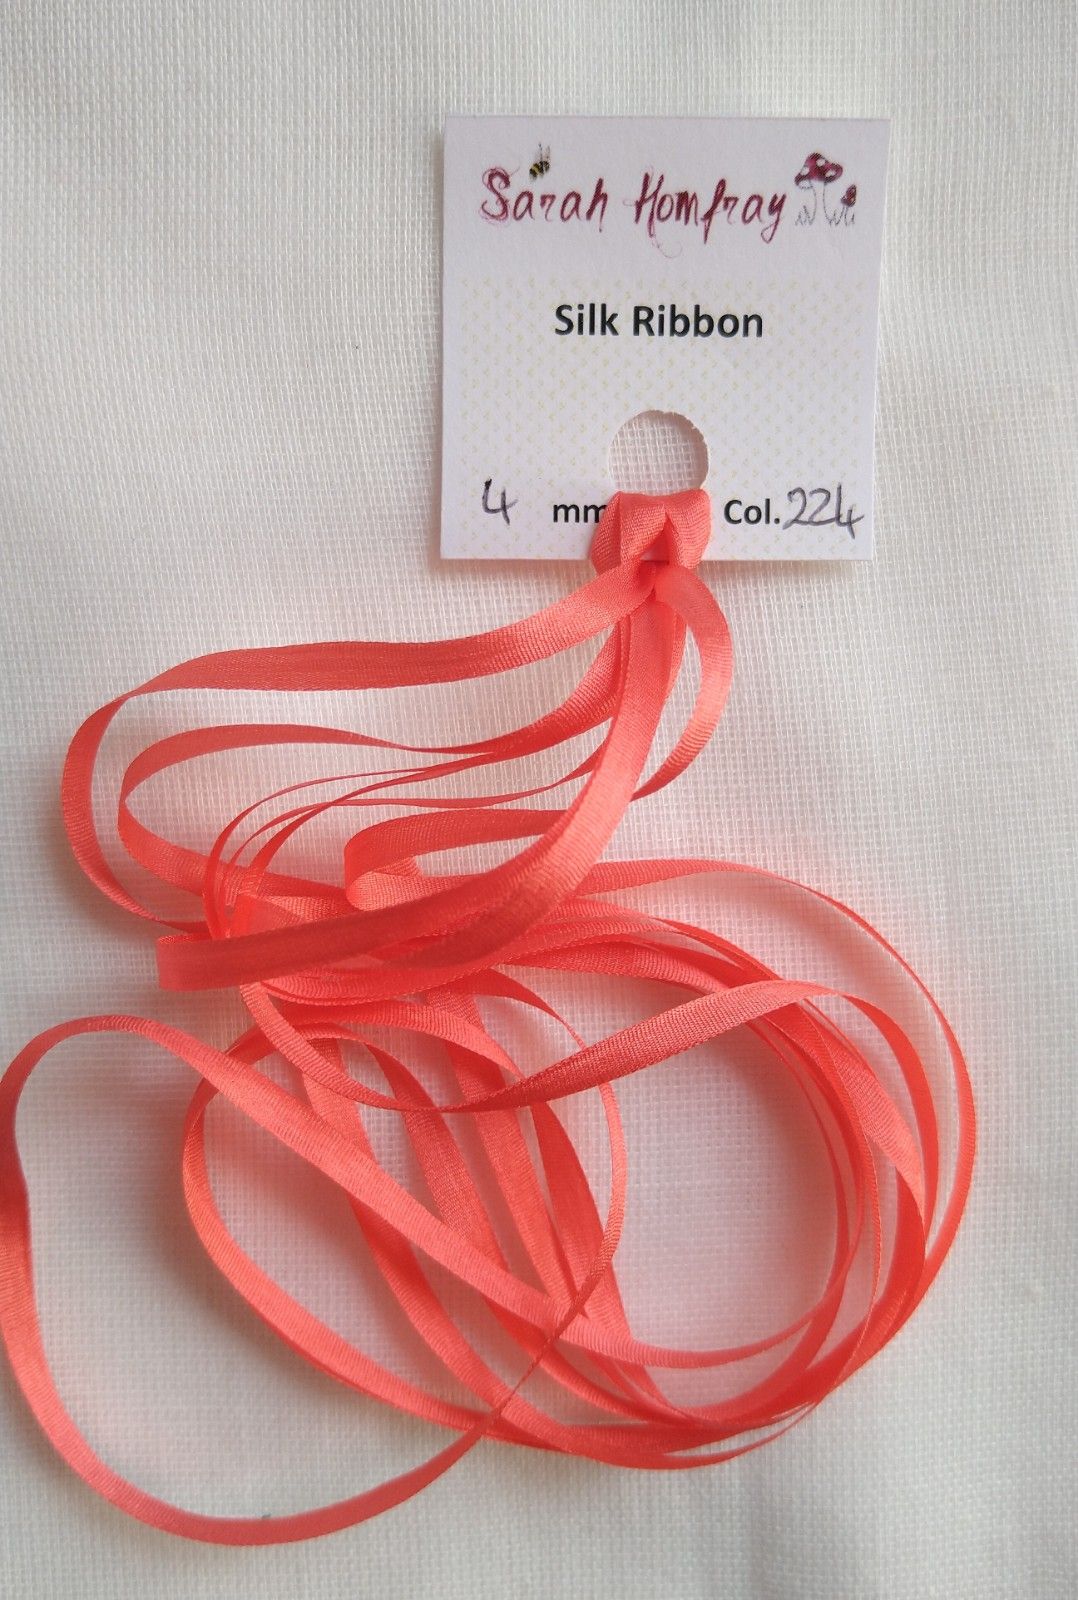 4mm Flamingo 224 silk ribbon